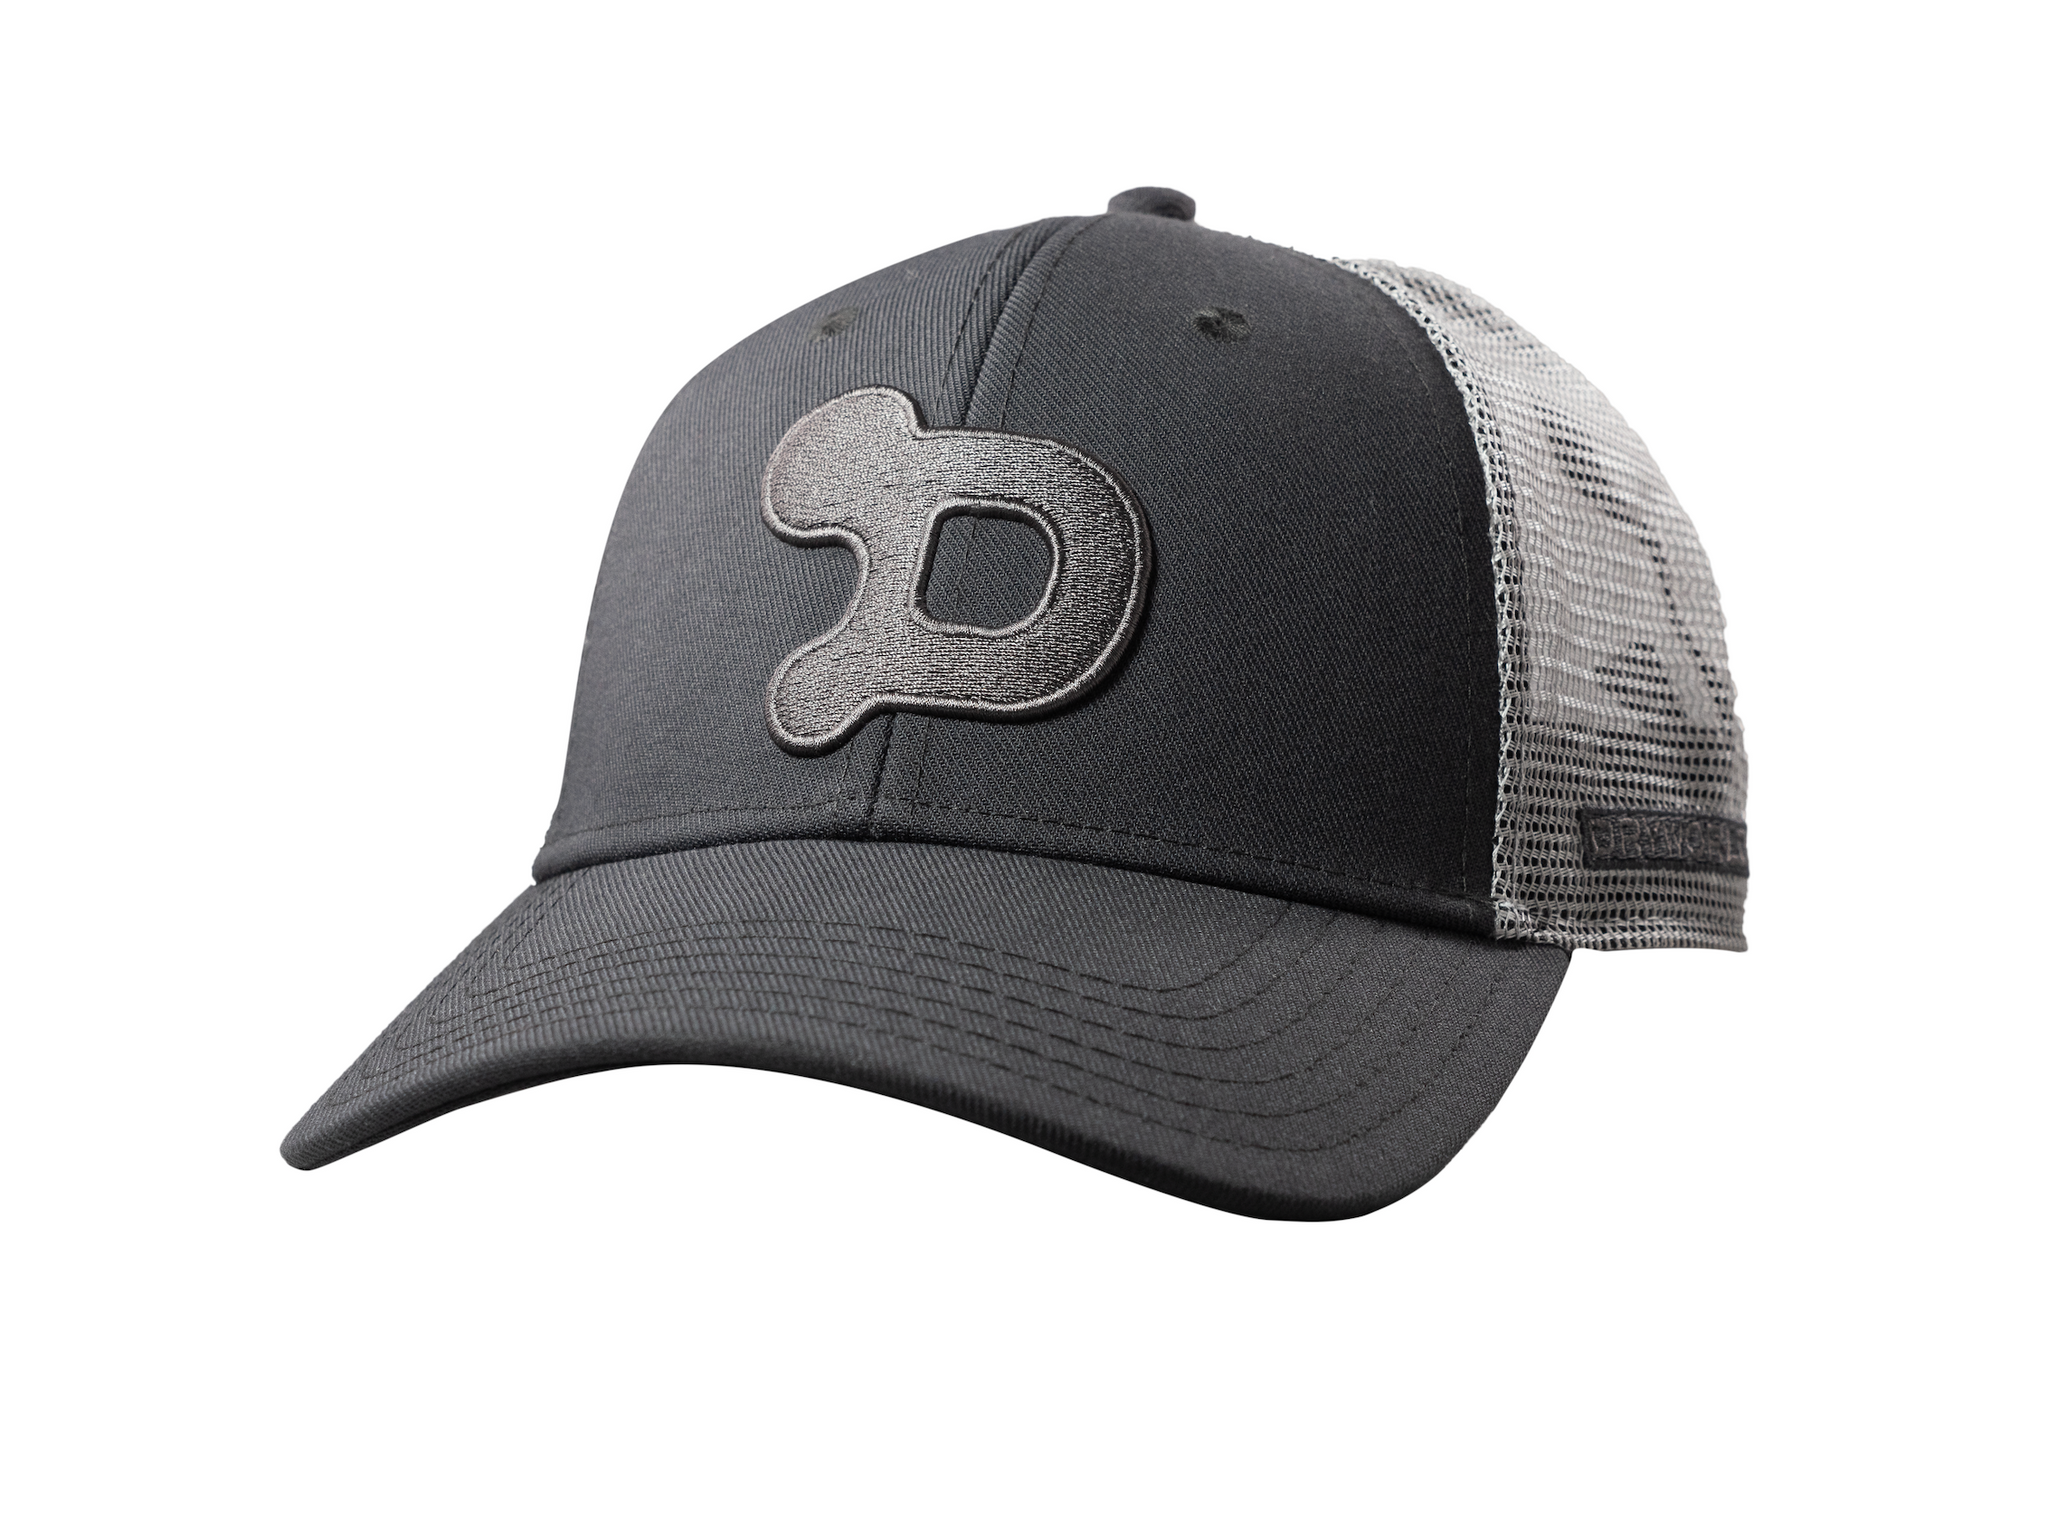 Men's Trucker Hat, D Trucker hat